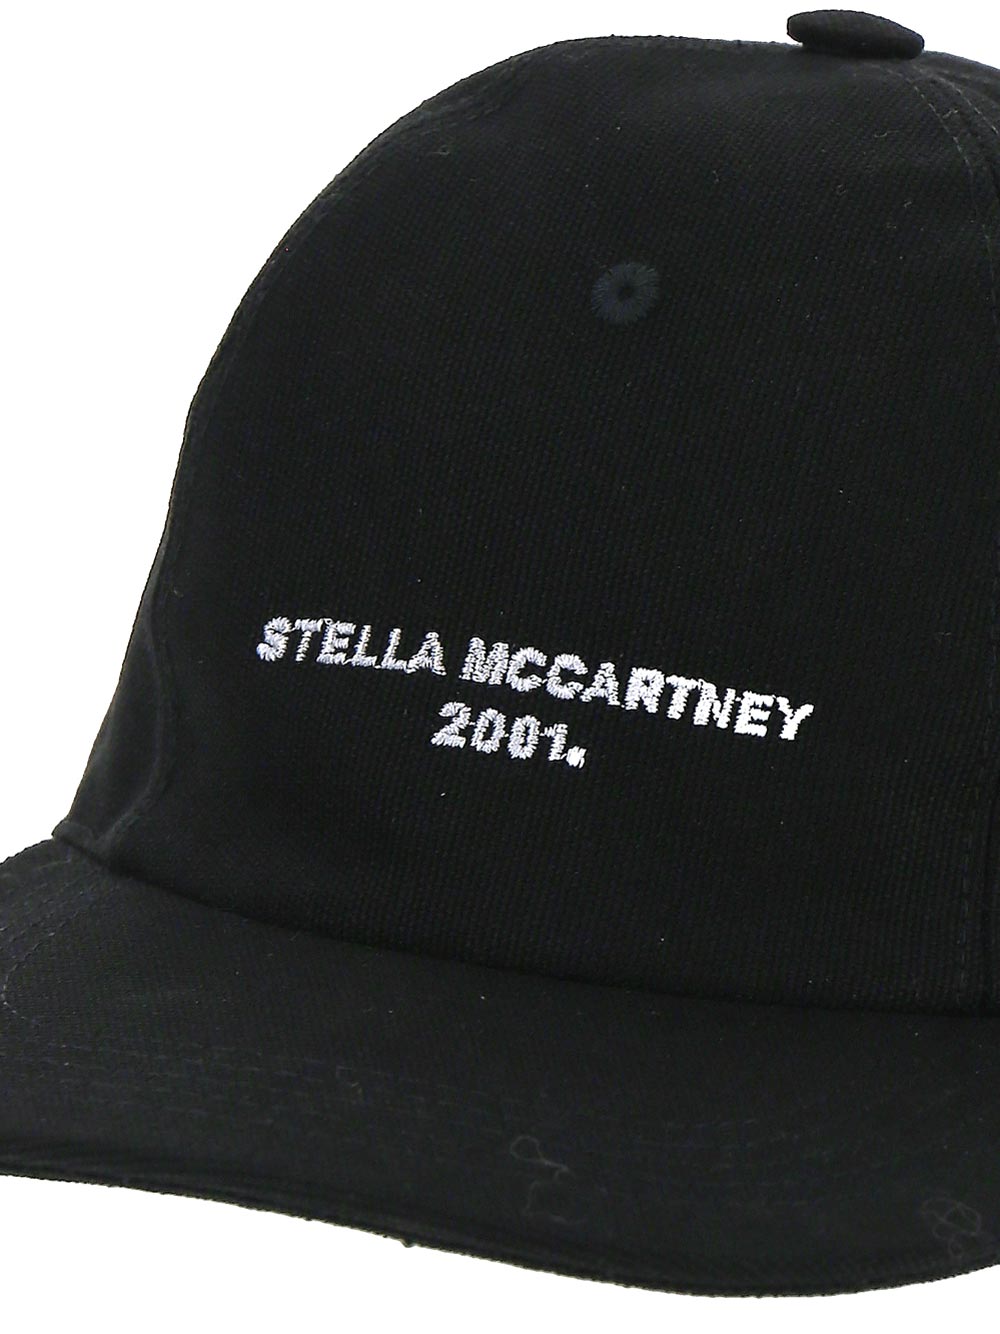 Stella Mccartney Logo-Embroidered Baseball Cap